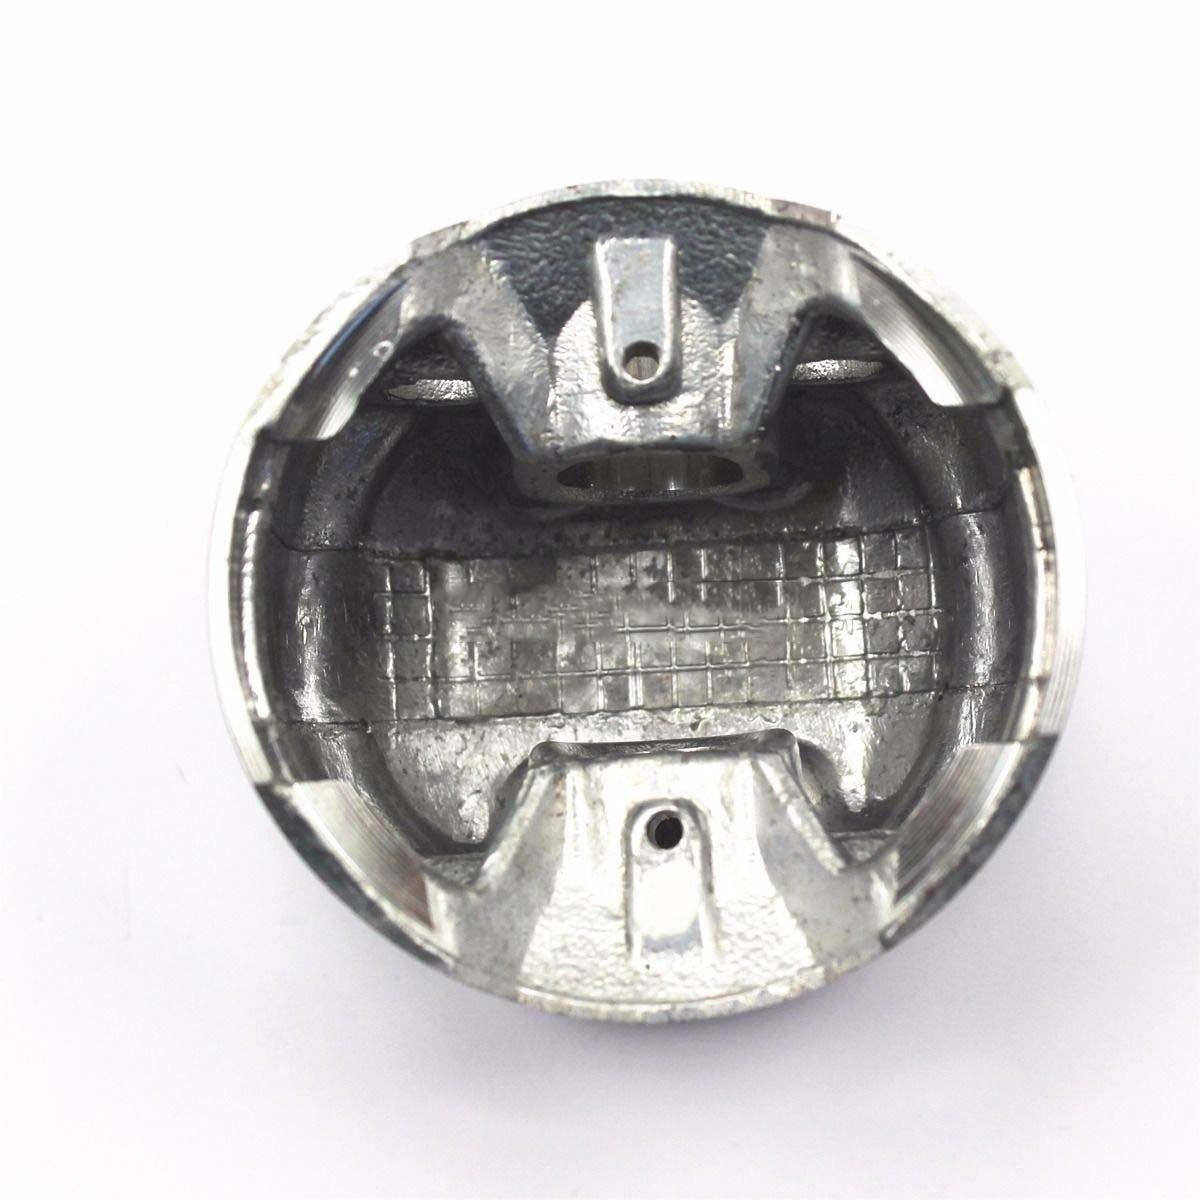 56mm 13mm Pin Piston Rings Kit + Gaskets YX 140cc Engine PIT PRO TRAIL DIRT BIKE - TDRMOTO